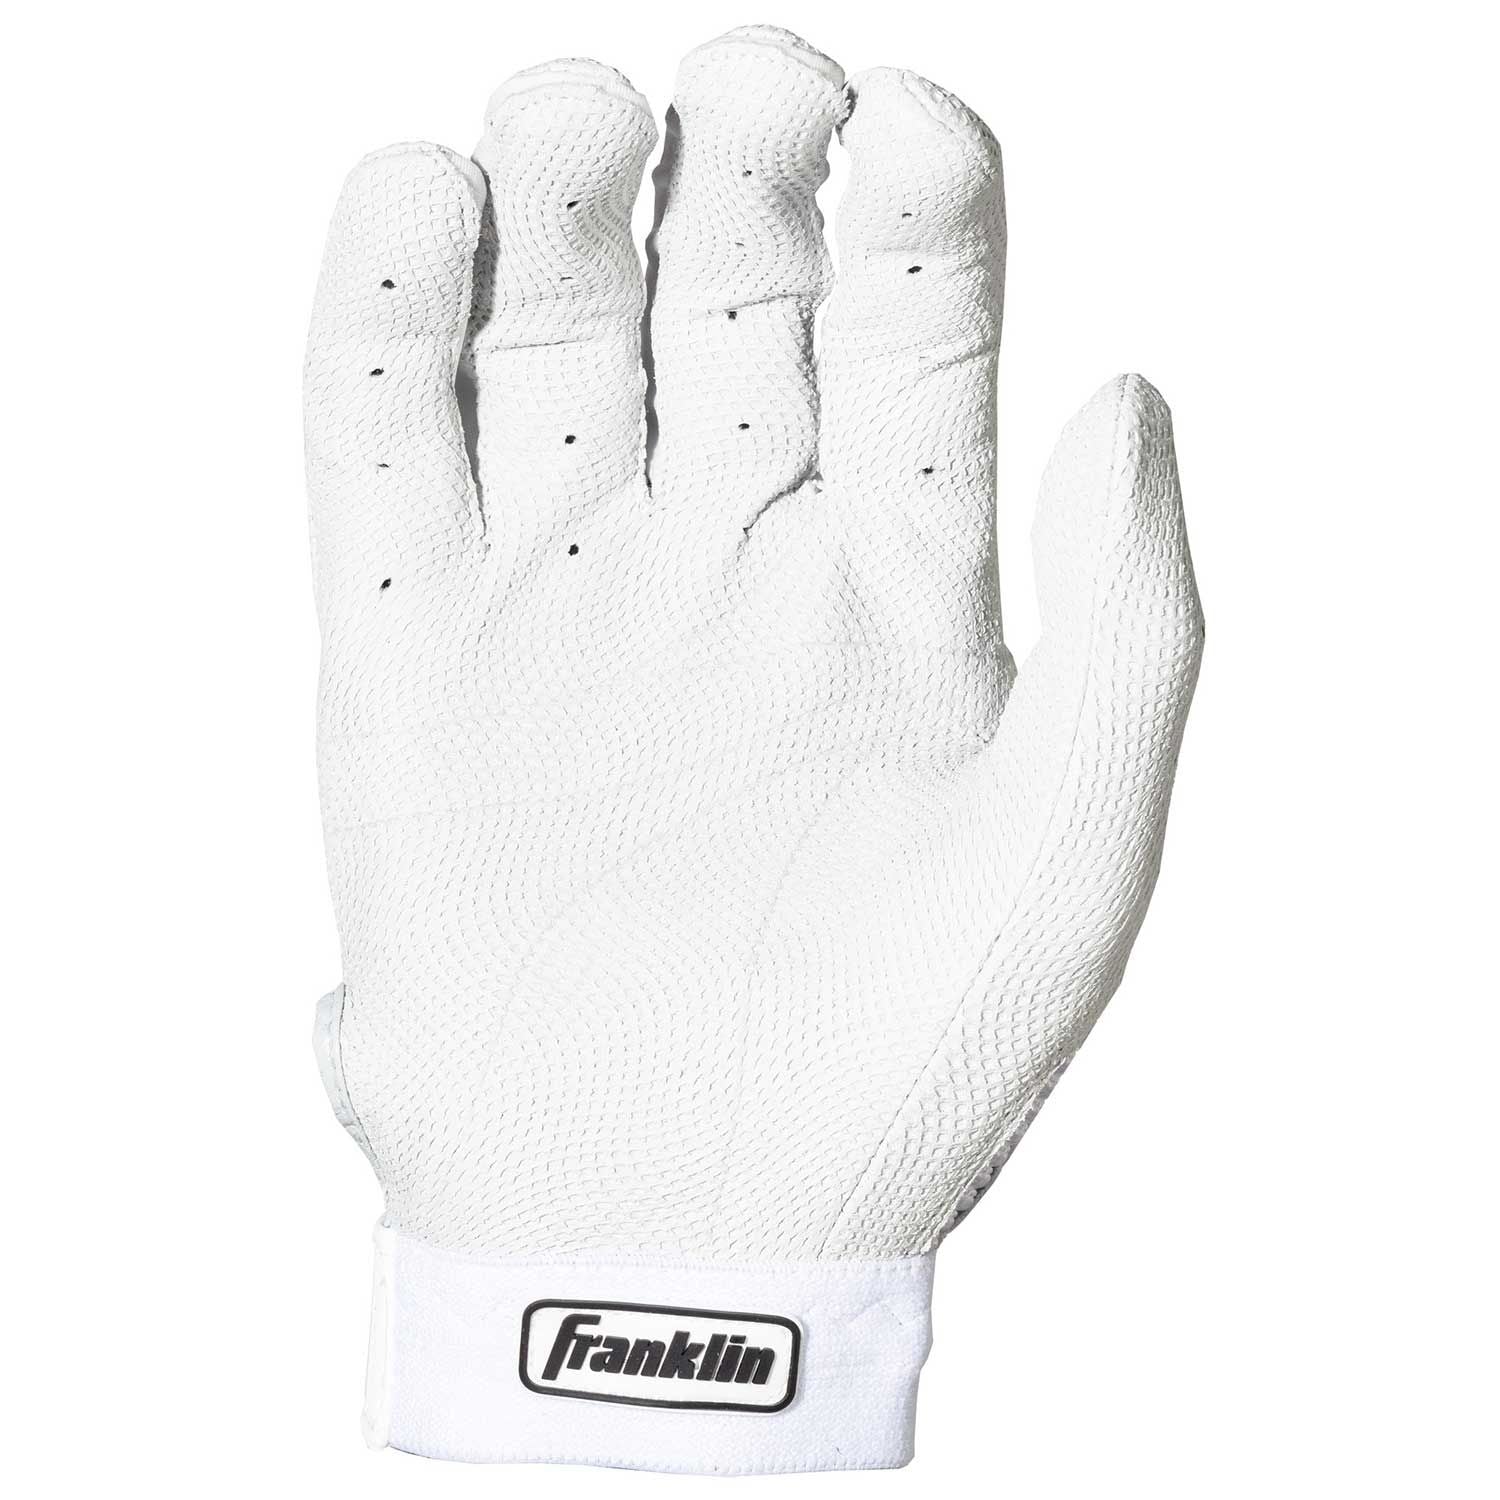 Franklin Pro Classic Batting Gloves - Adult - White